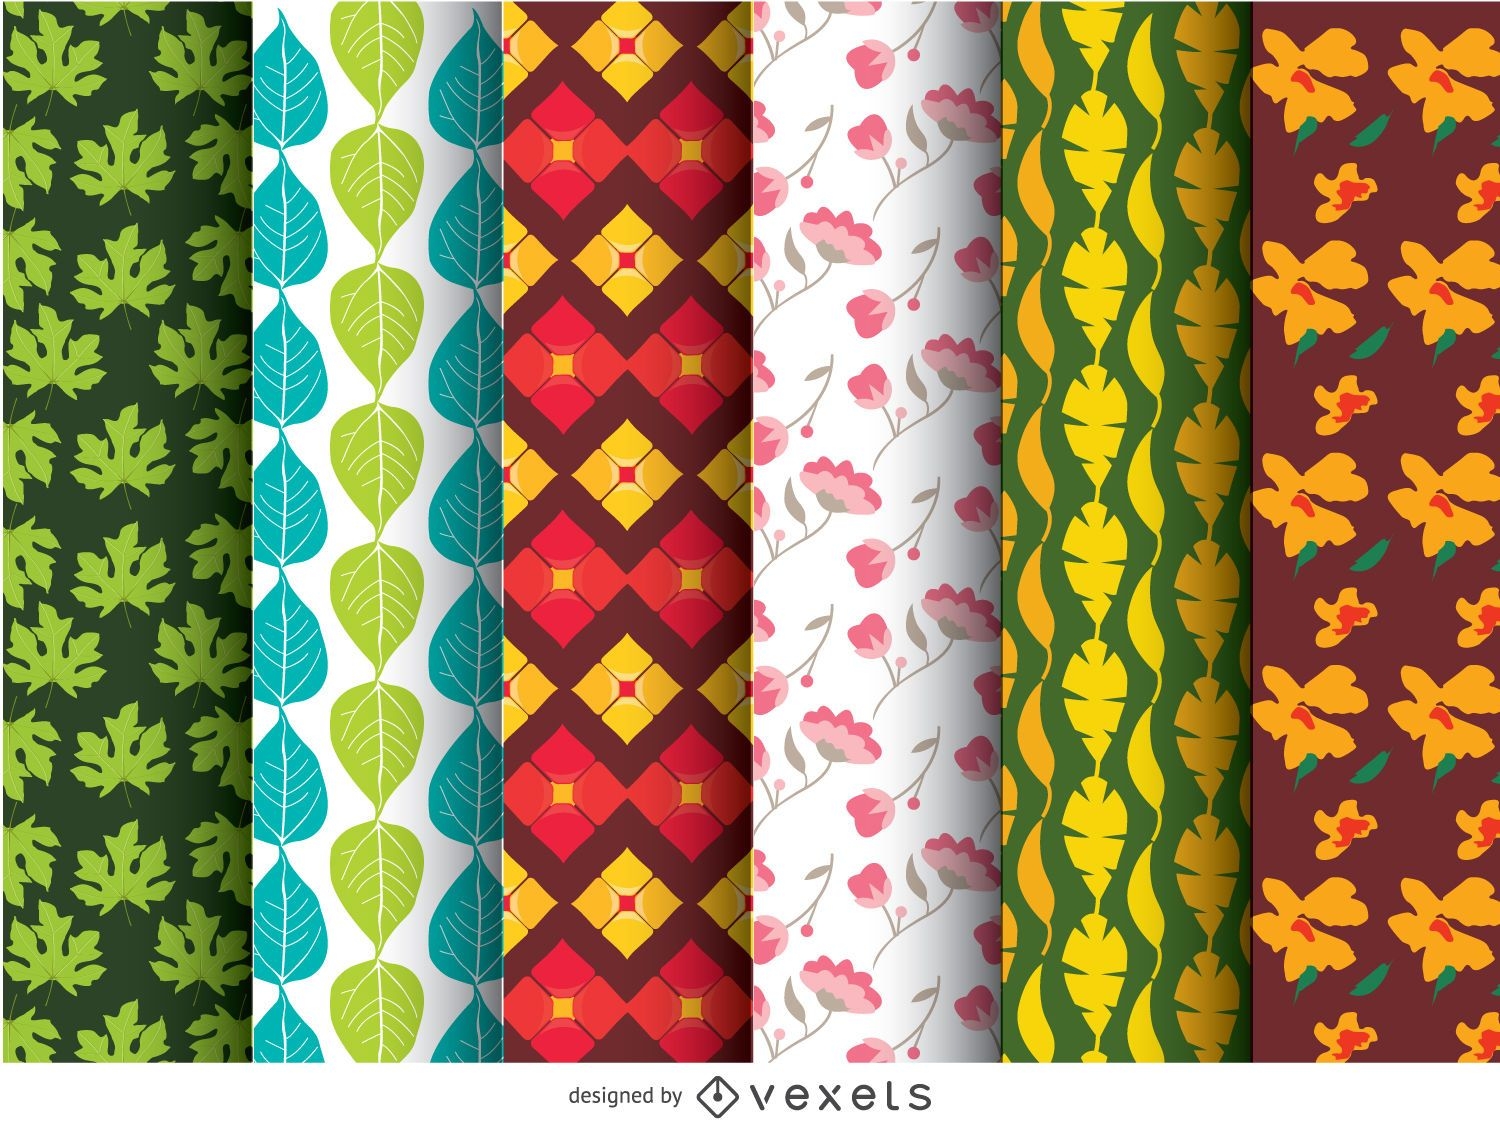 6 wallpaper patterns